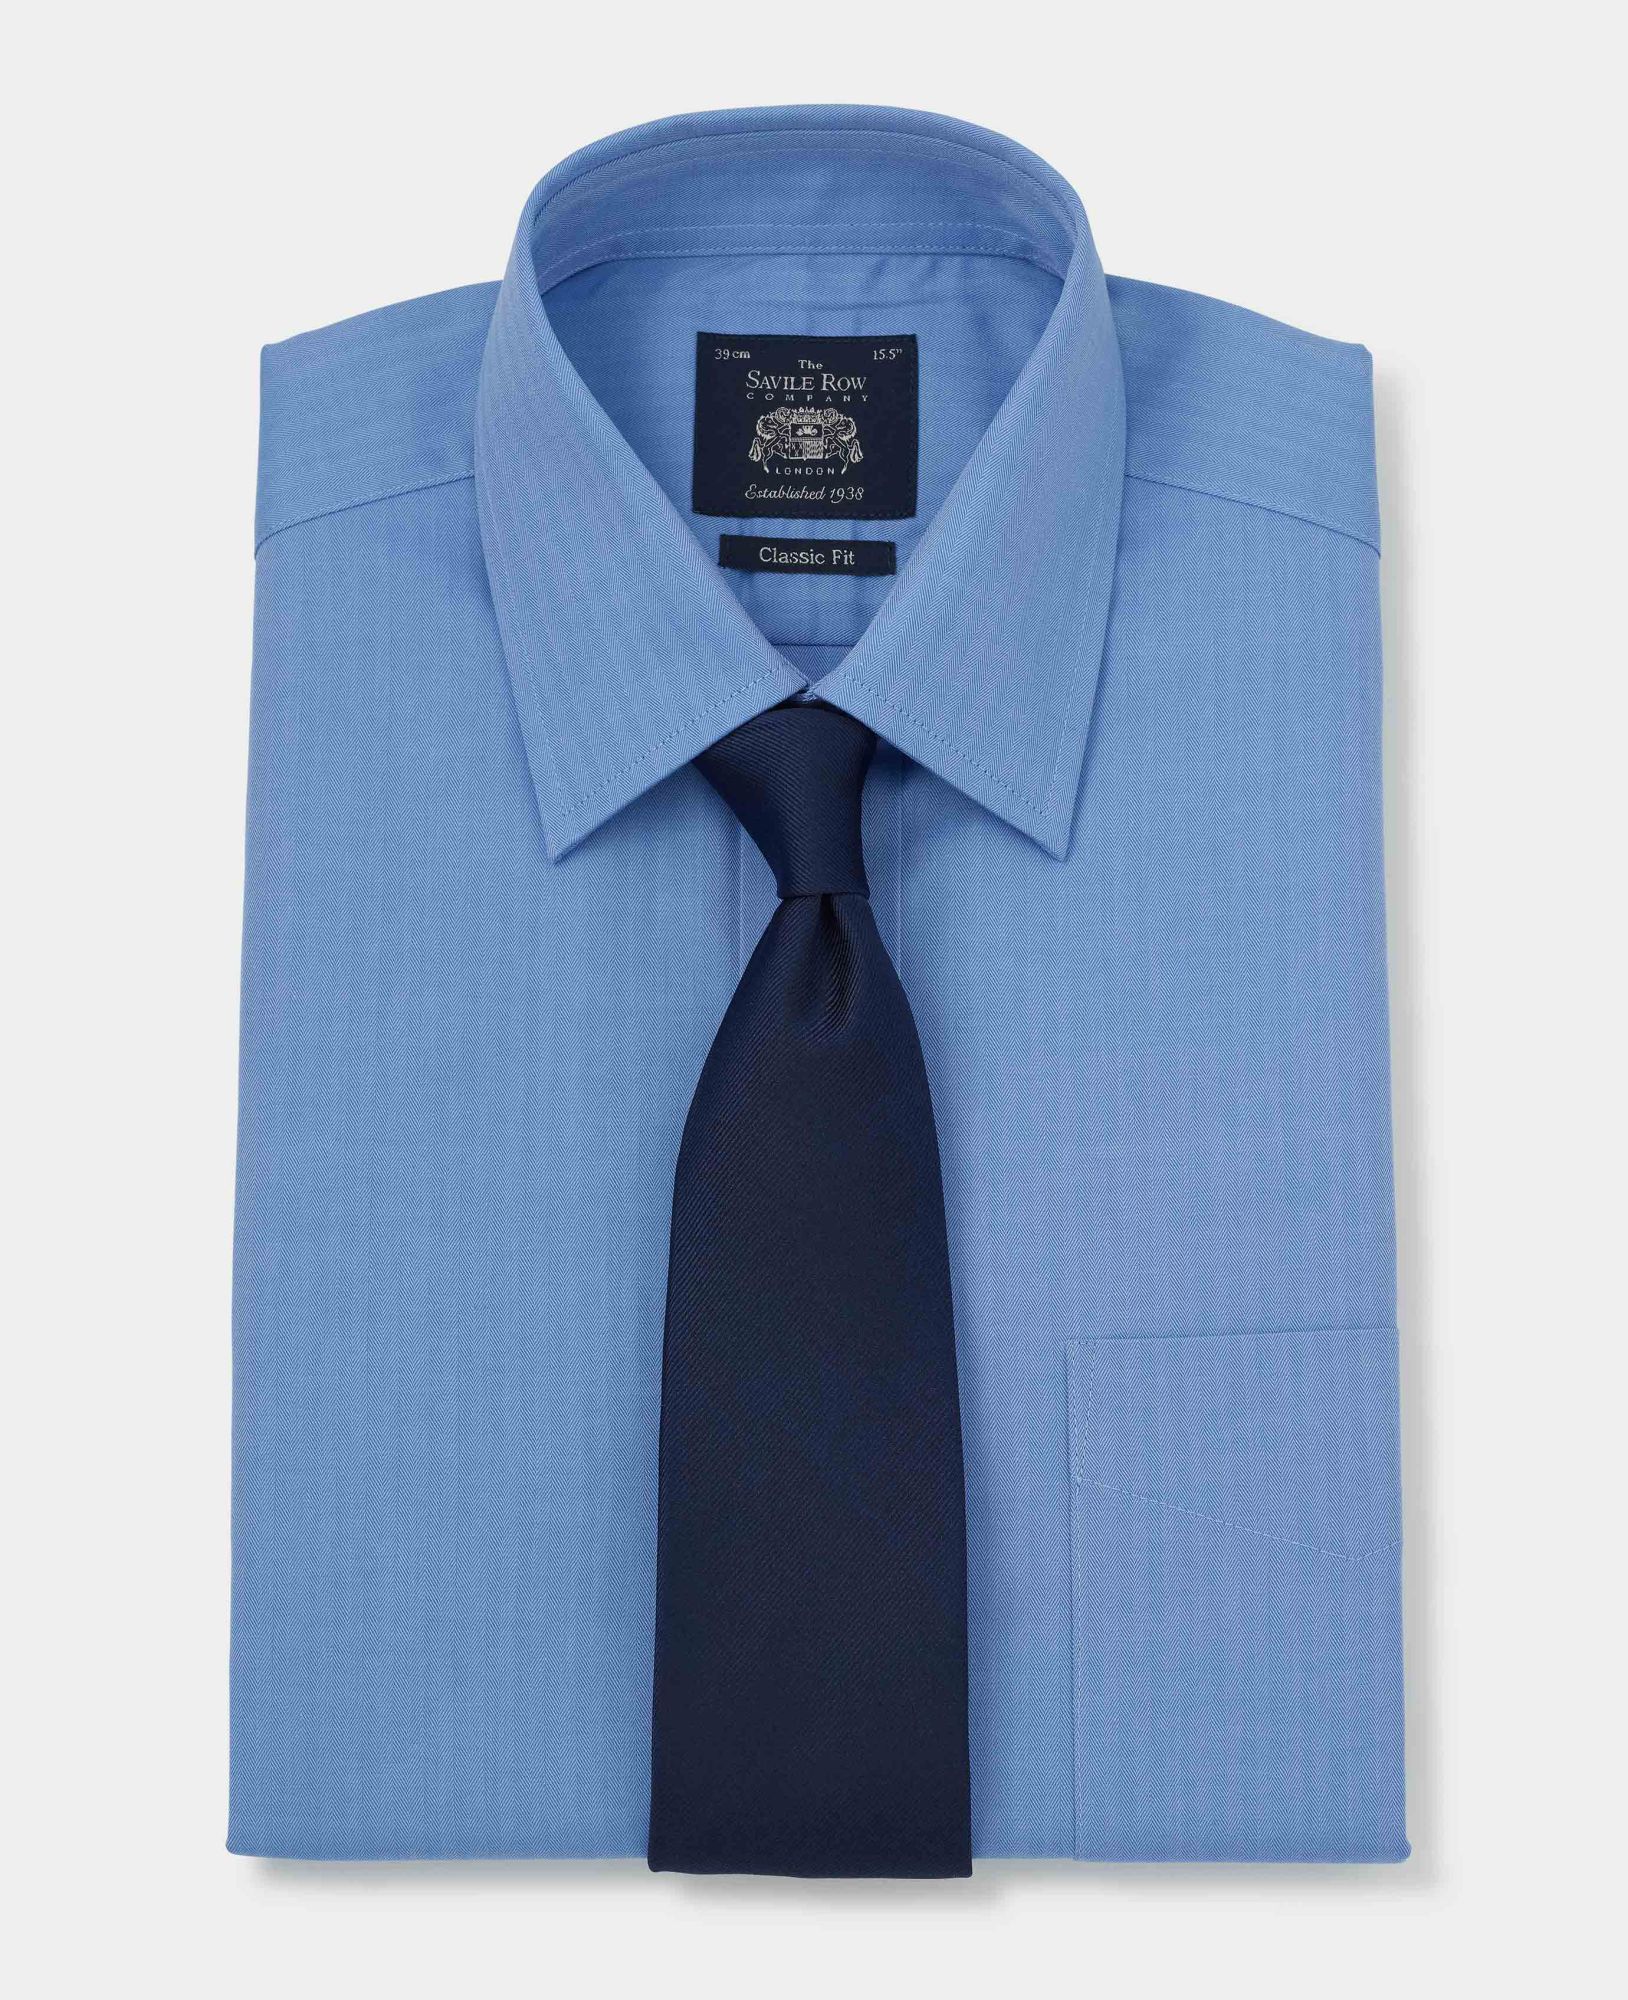 Mid Blue Herringbone Classic Fit Shirt - Double Cuff 16 1/2